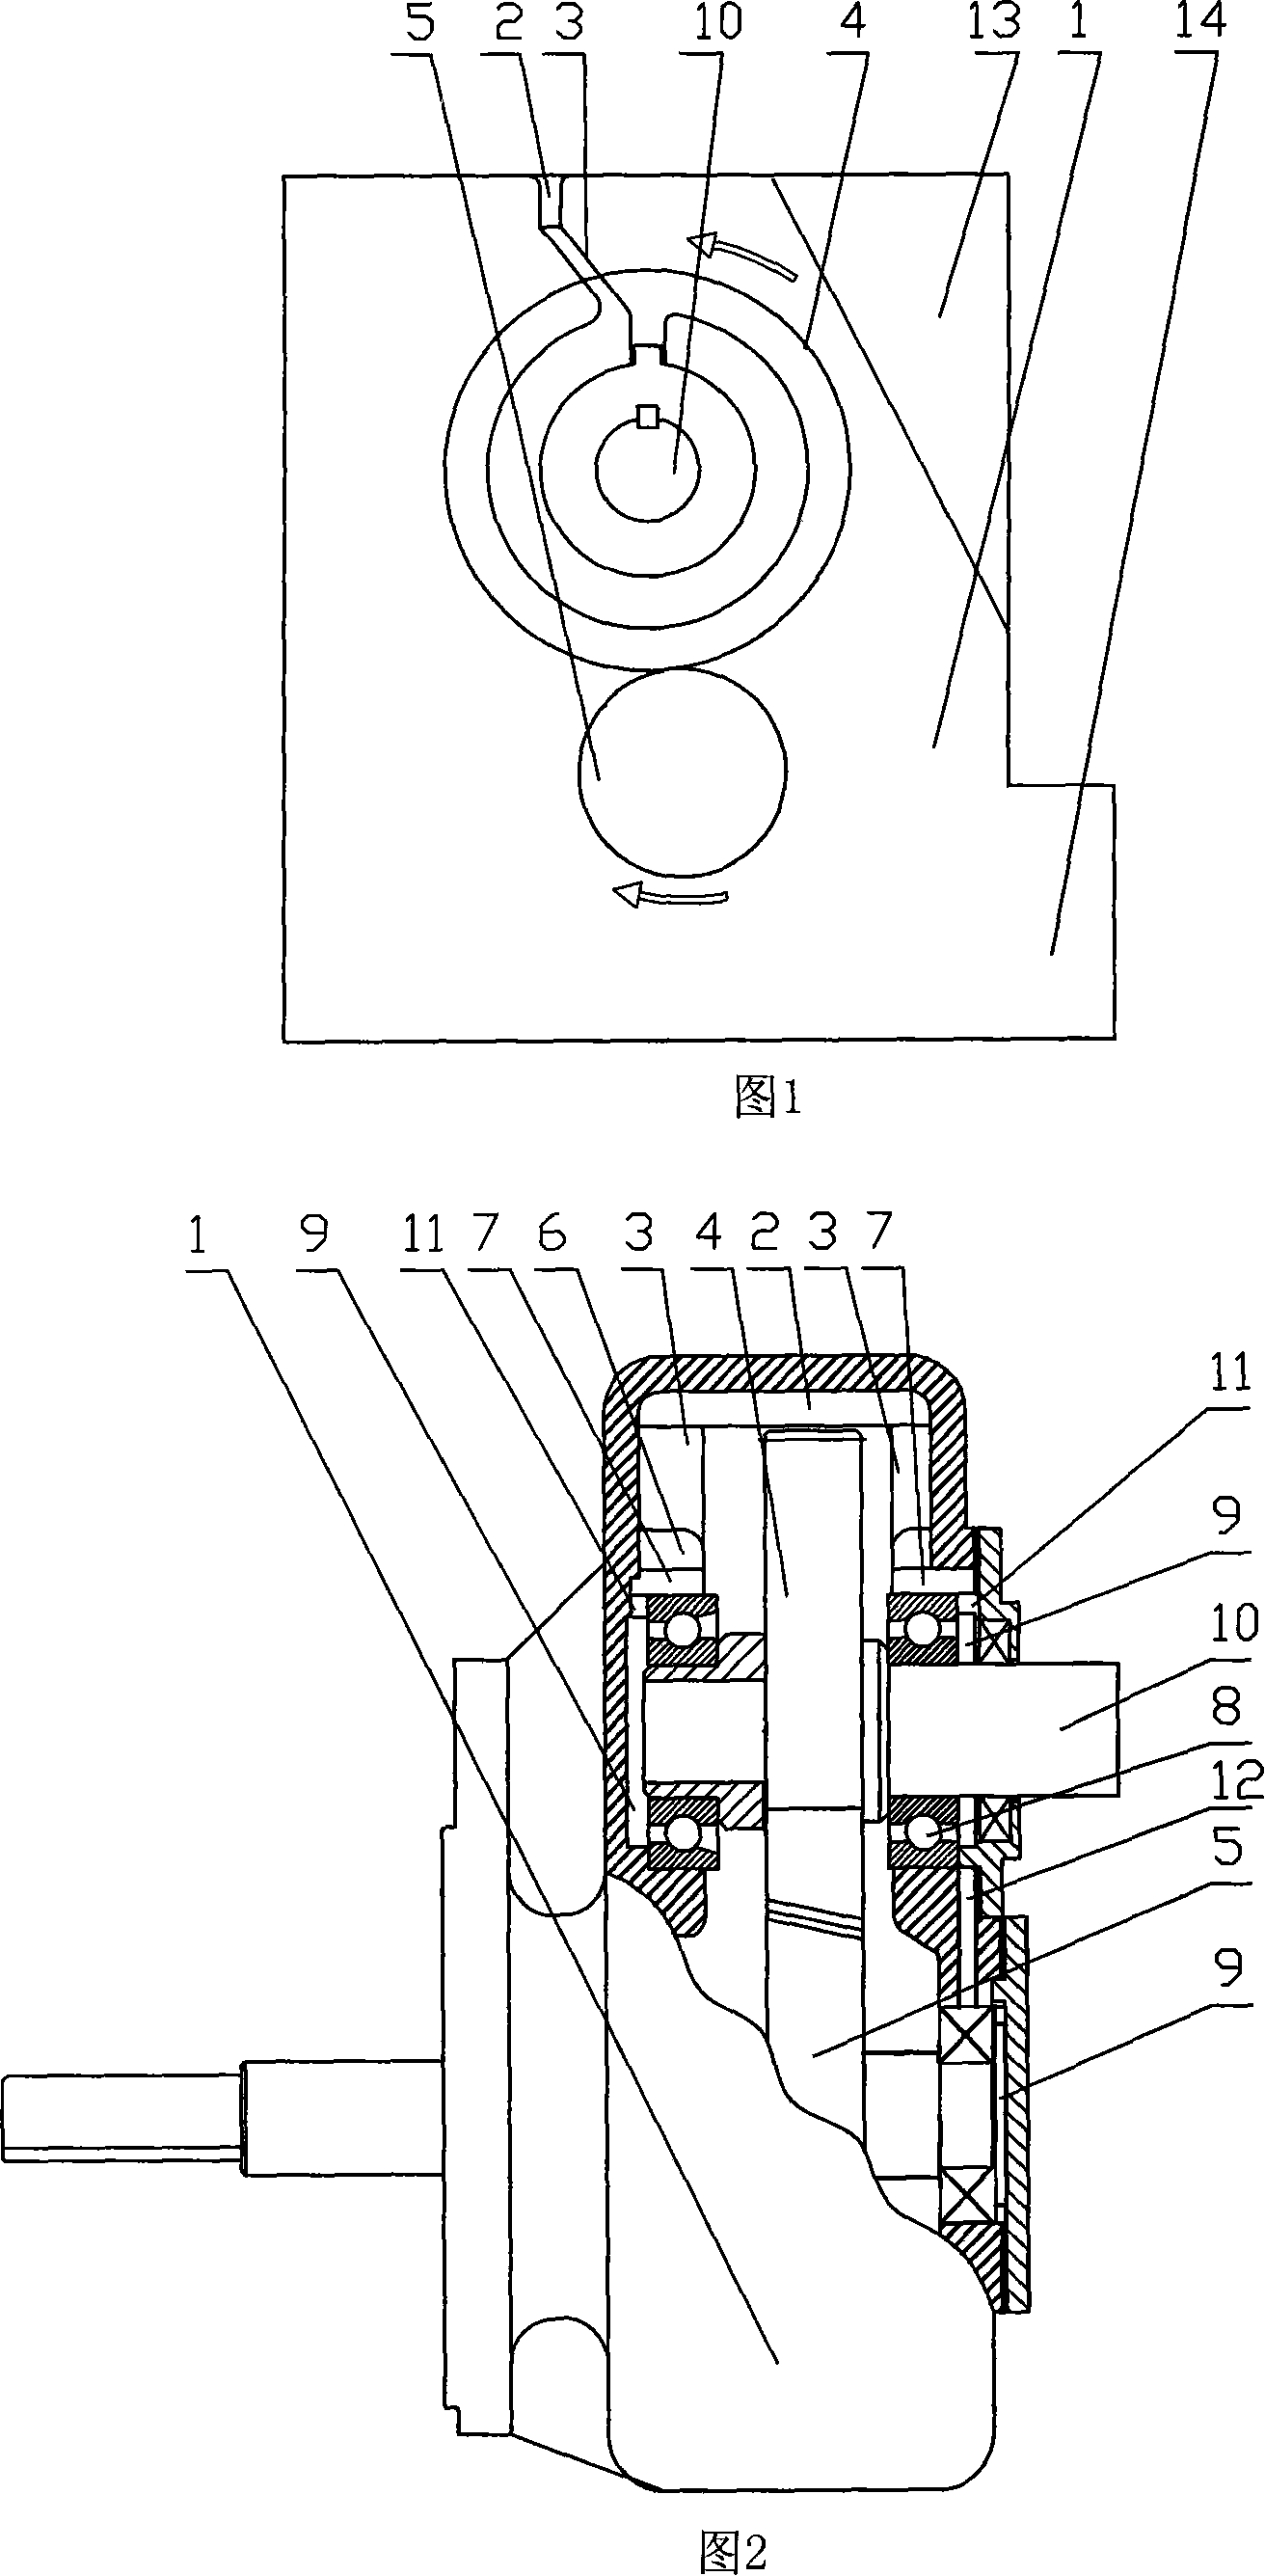 Gear self-lubricating device for gear box